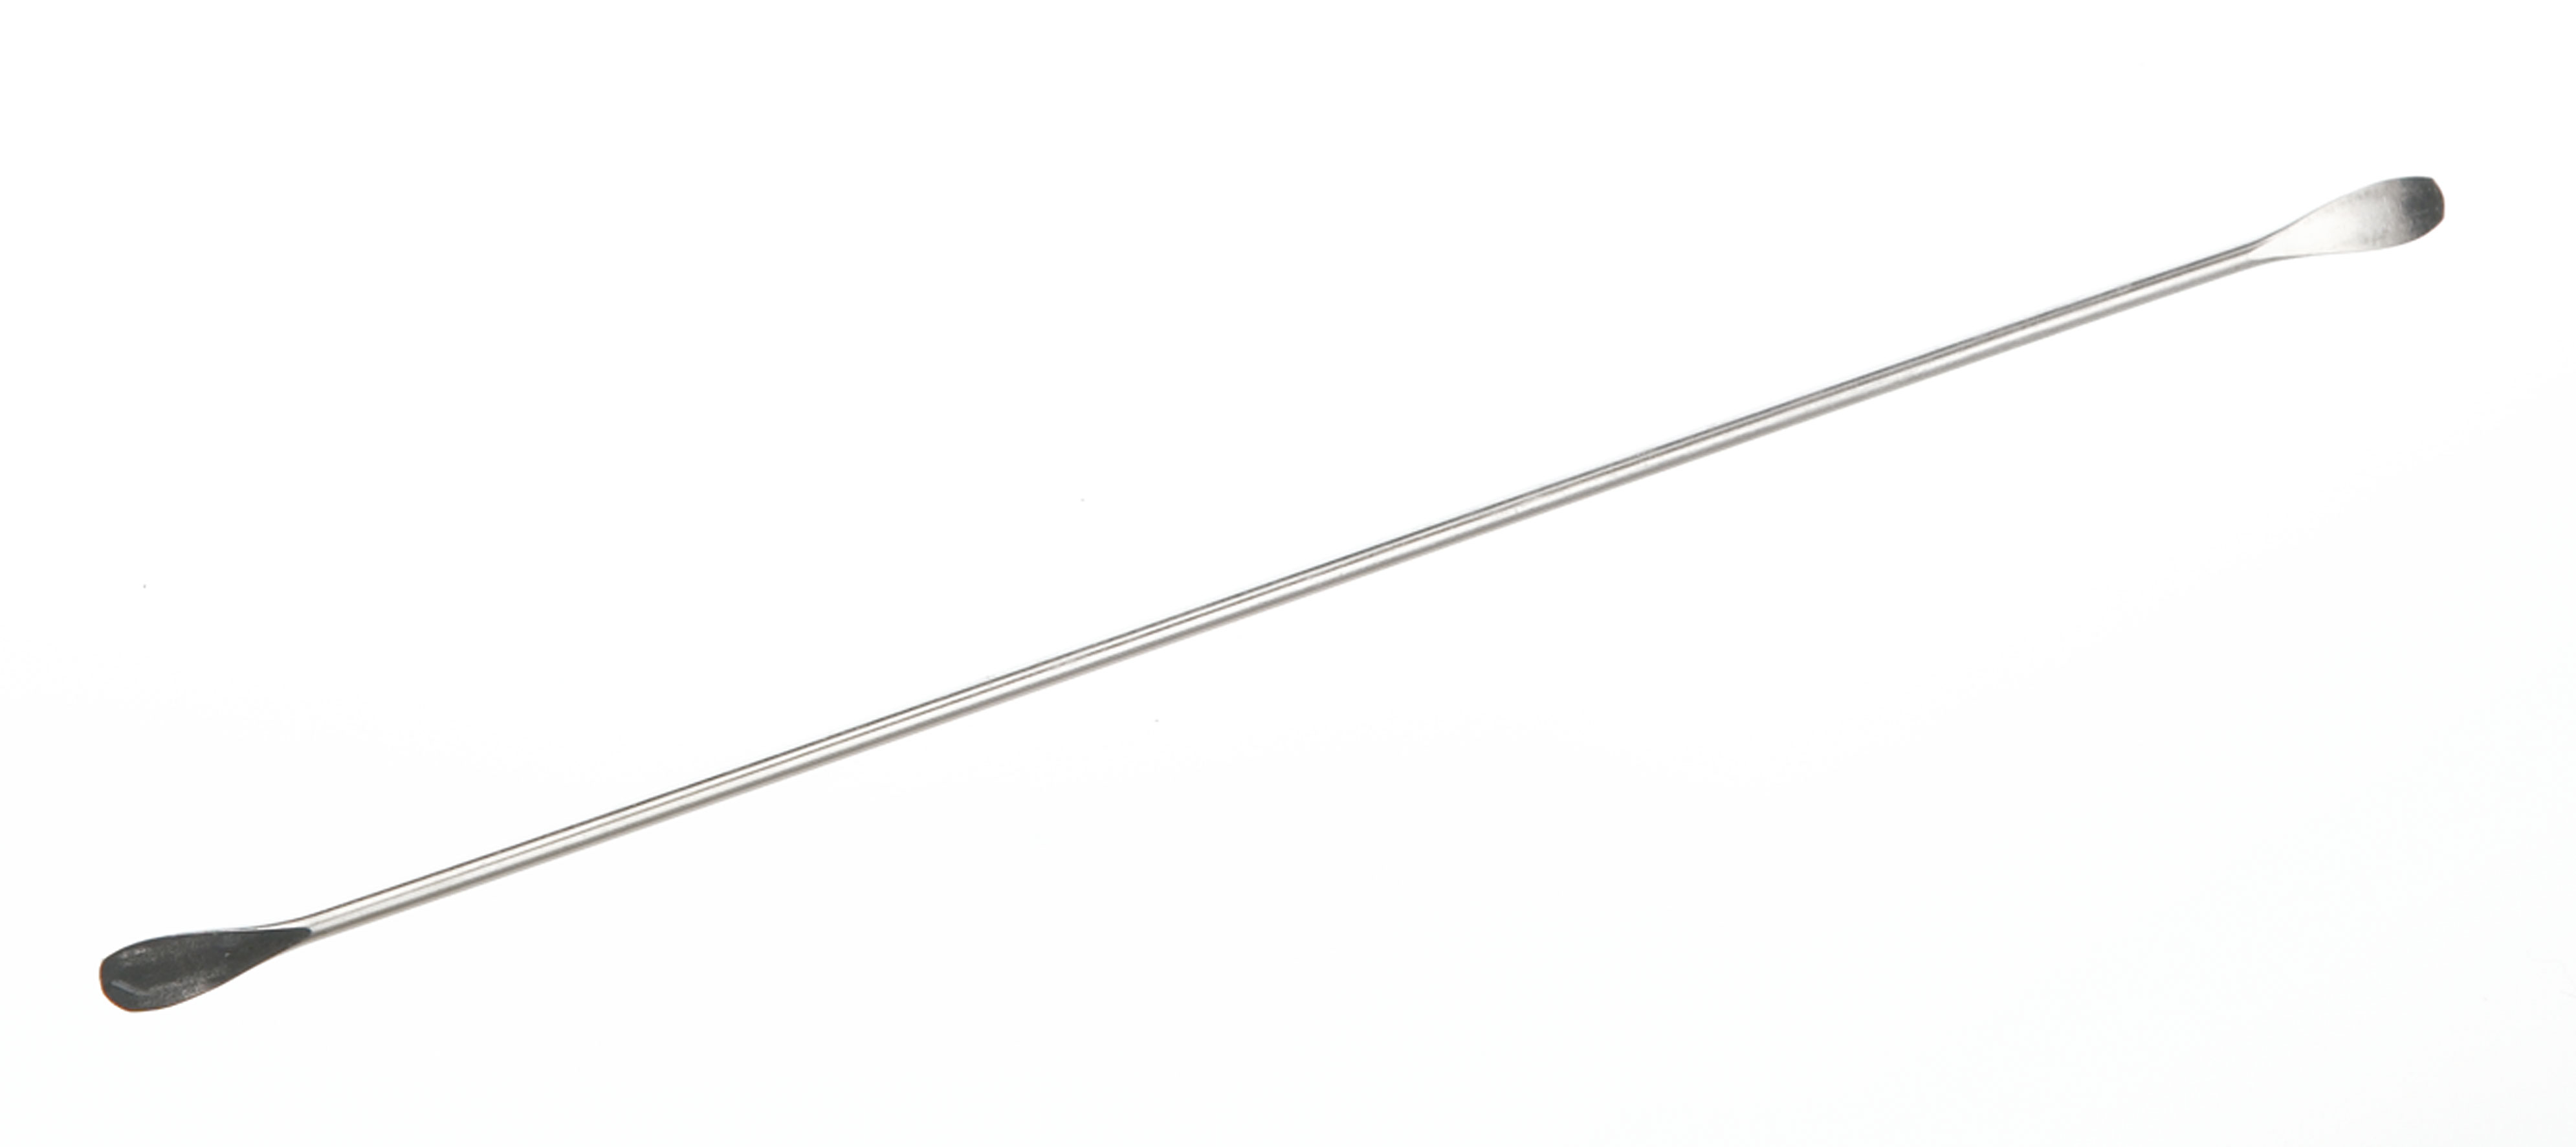 Espátula doble, en forma de cuchara. Longitud/Ancho (mm): 5x210